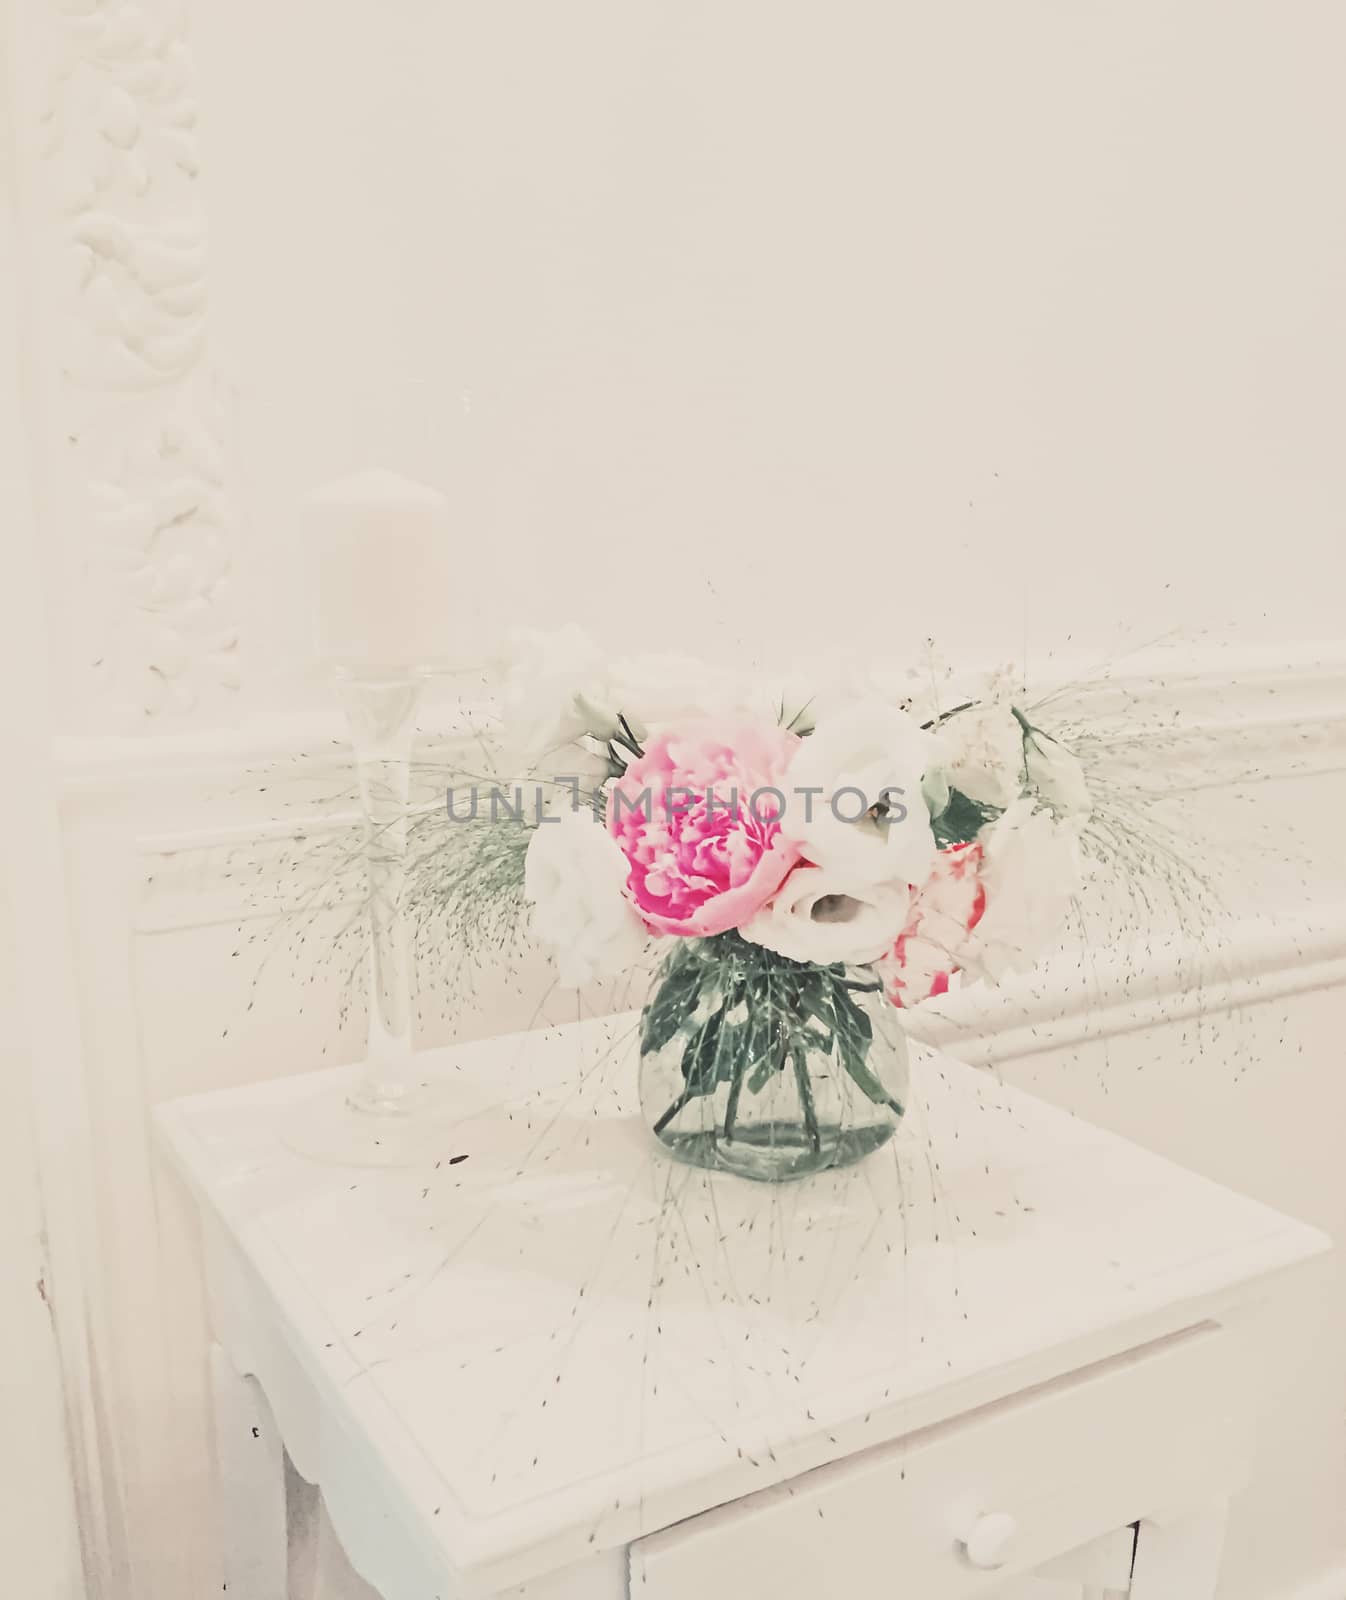 Bouquet of flowers in vase, chic interior design